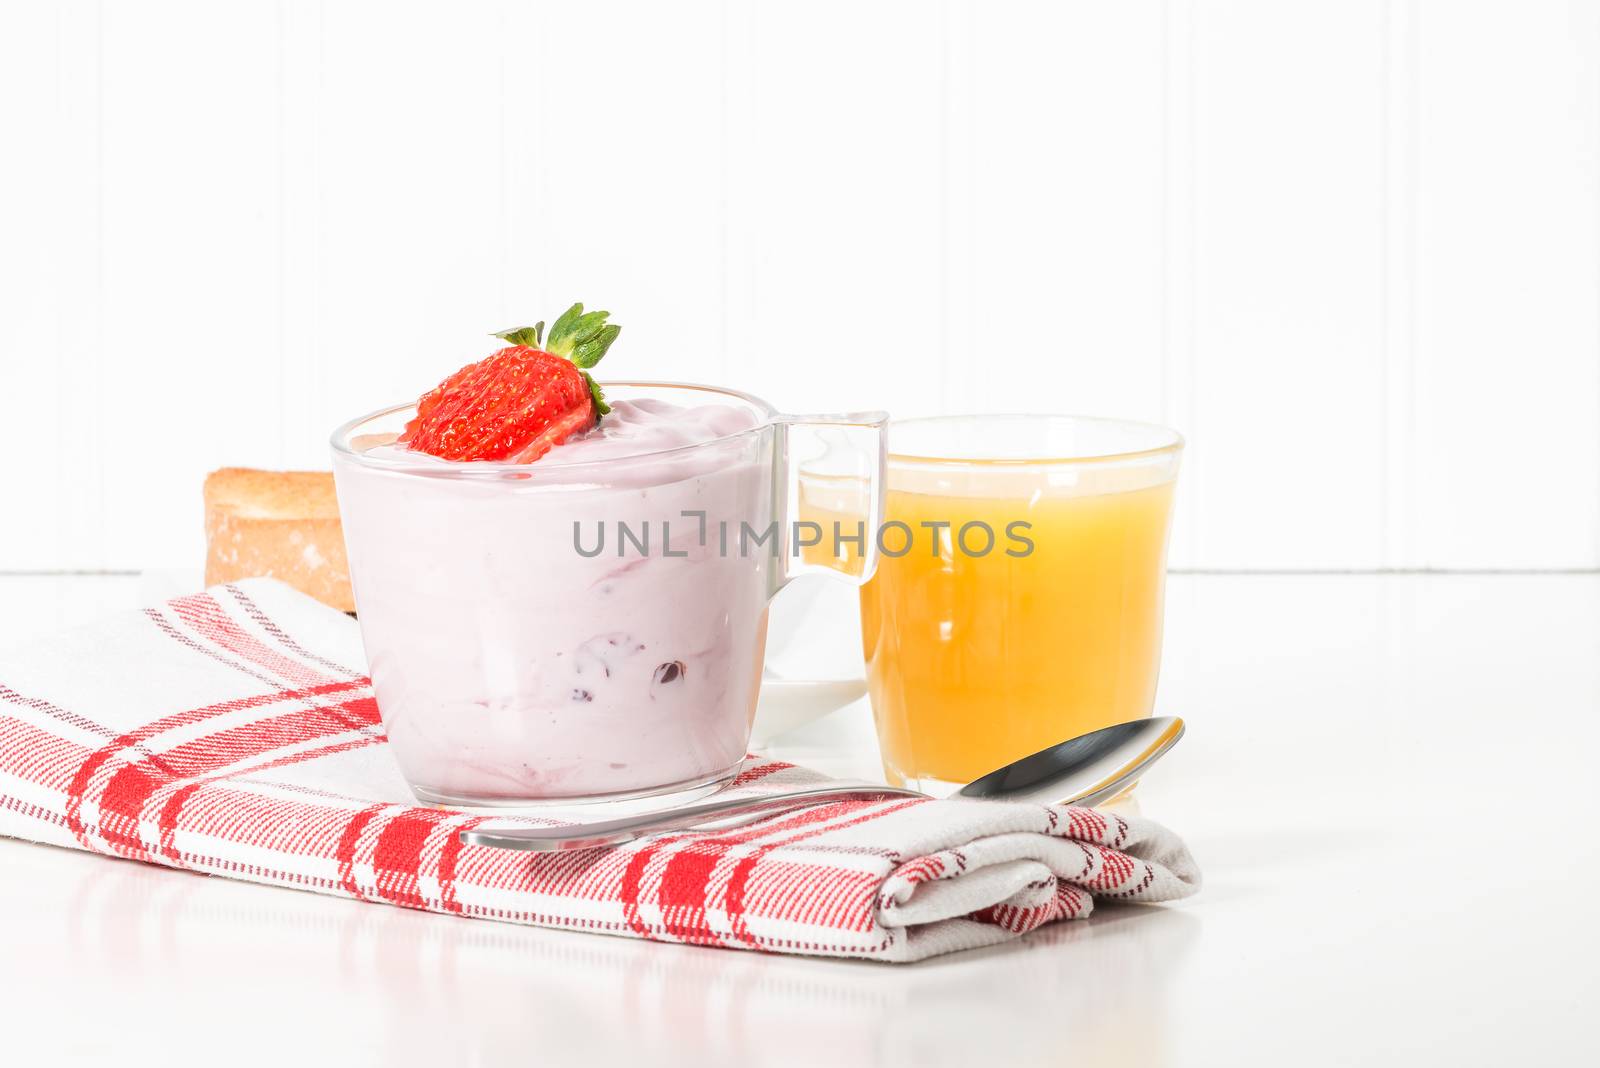 Greek Yogurt Cup by billberryphotography